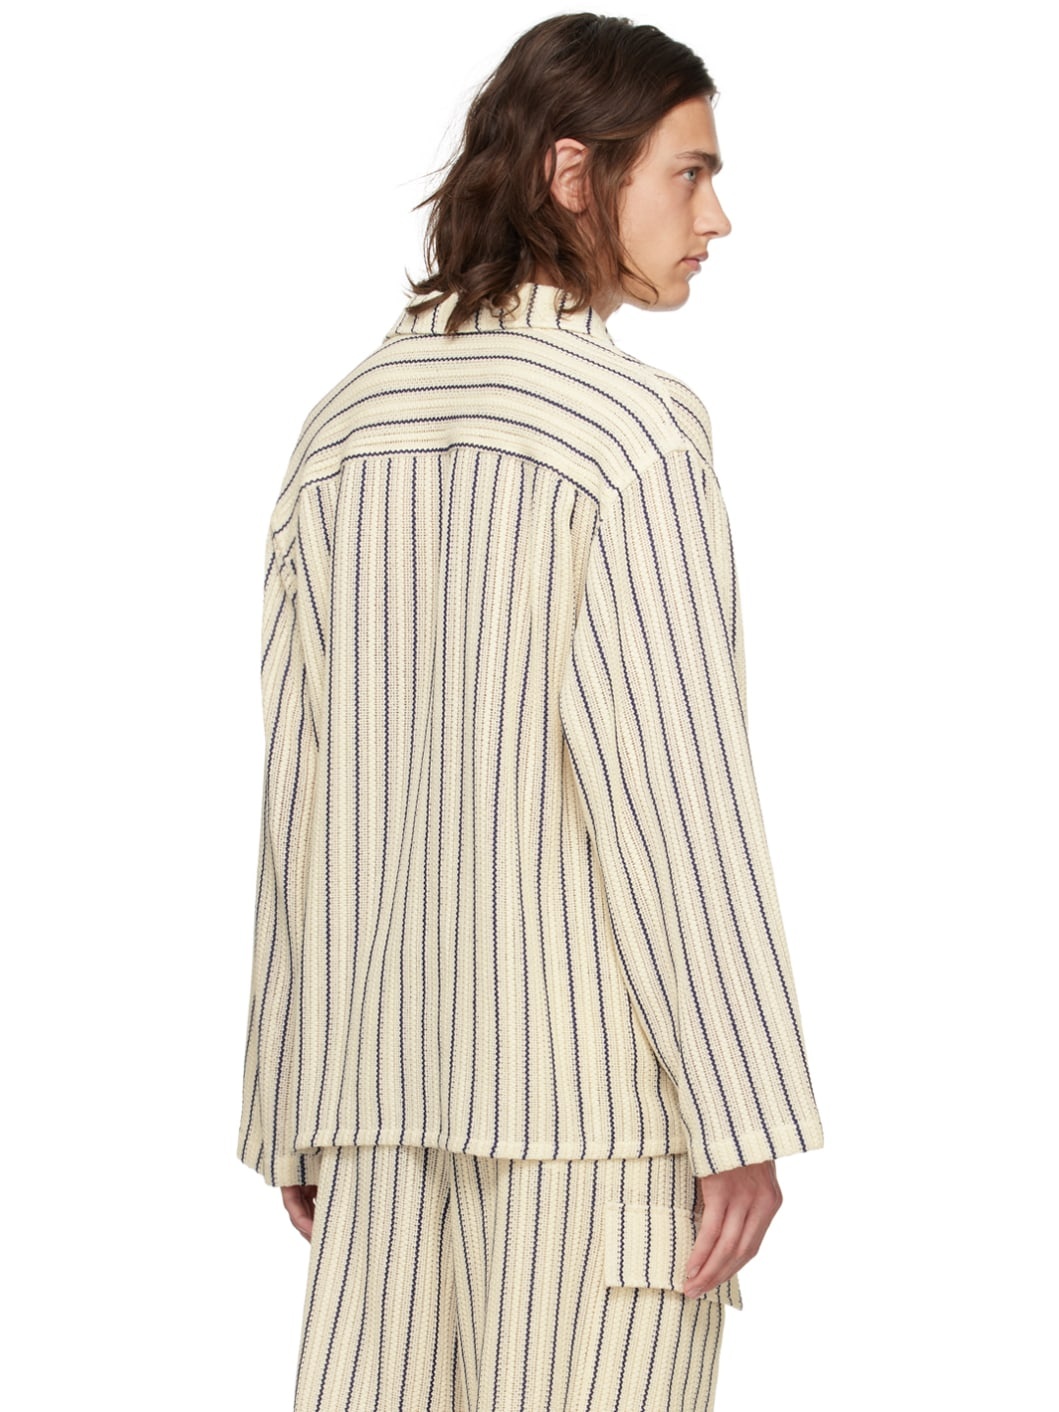 Off-White Striped Shirt - 3